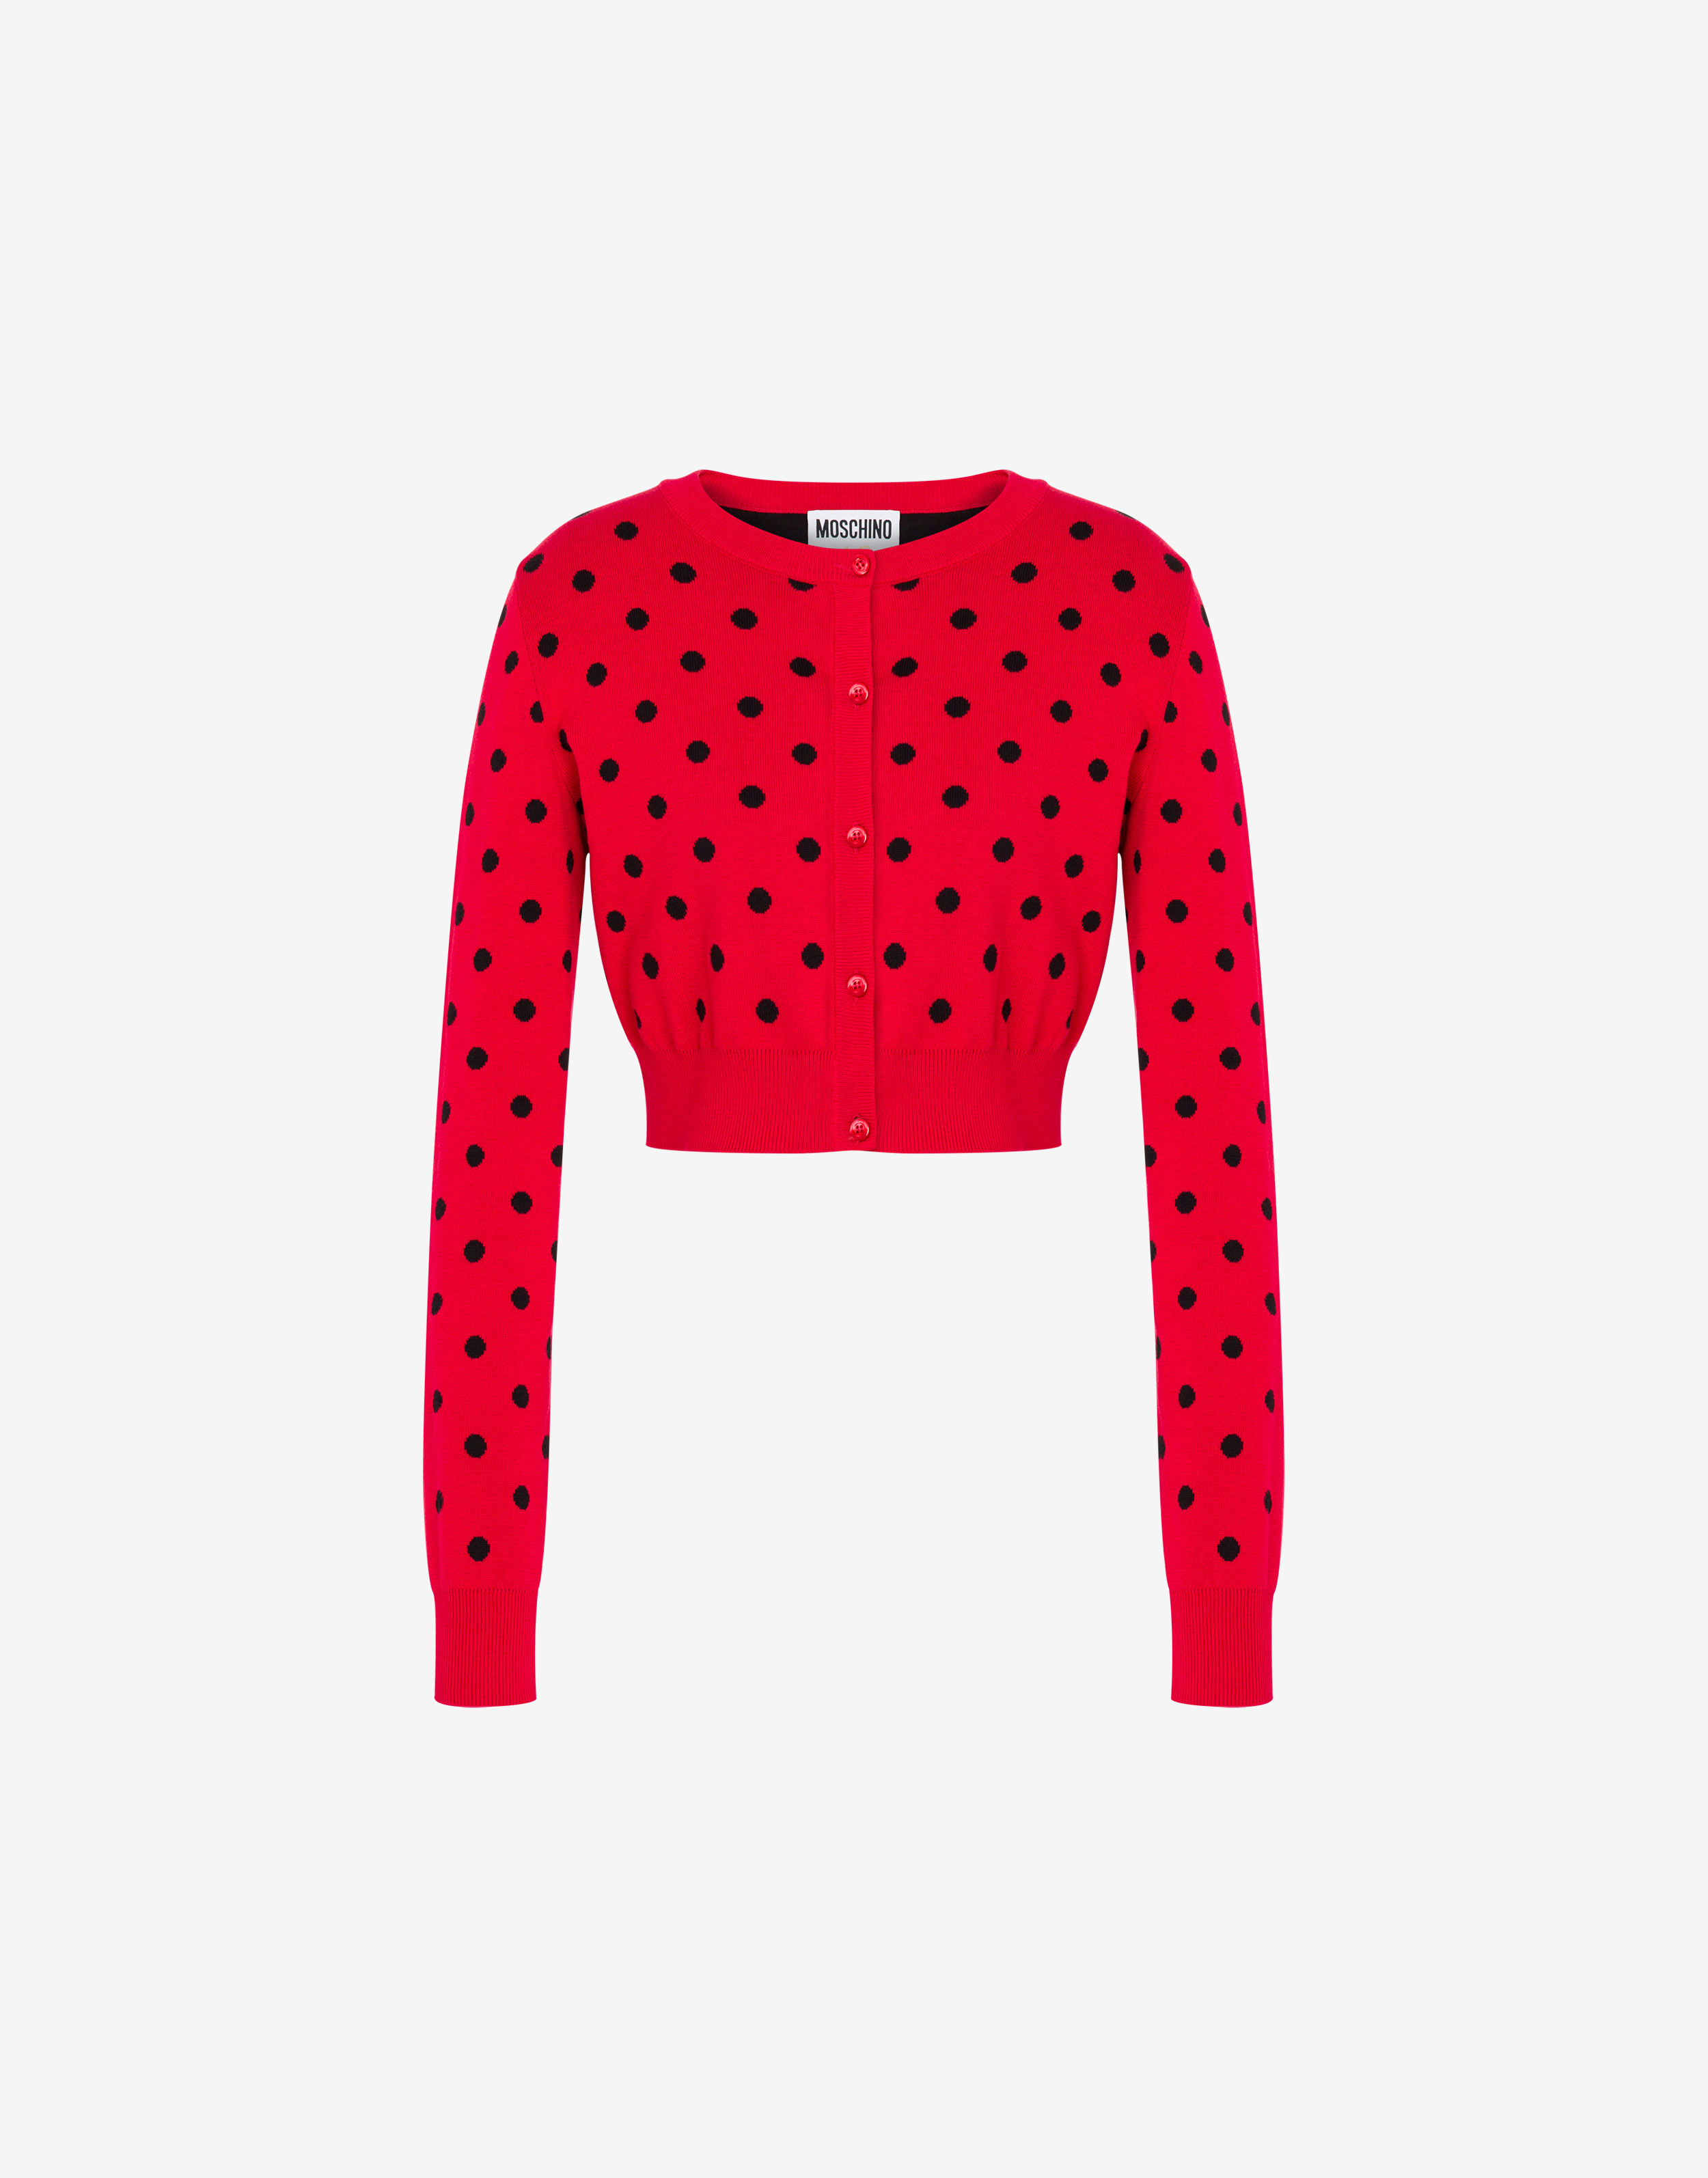 Love Moschino Pink Cotton Sweater – Kechiq Concept Boutique